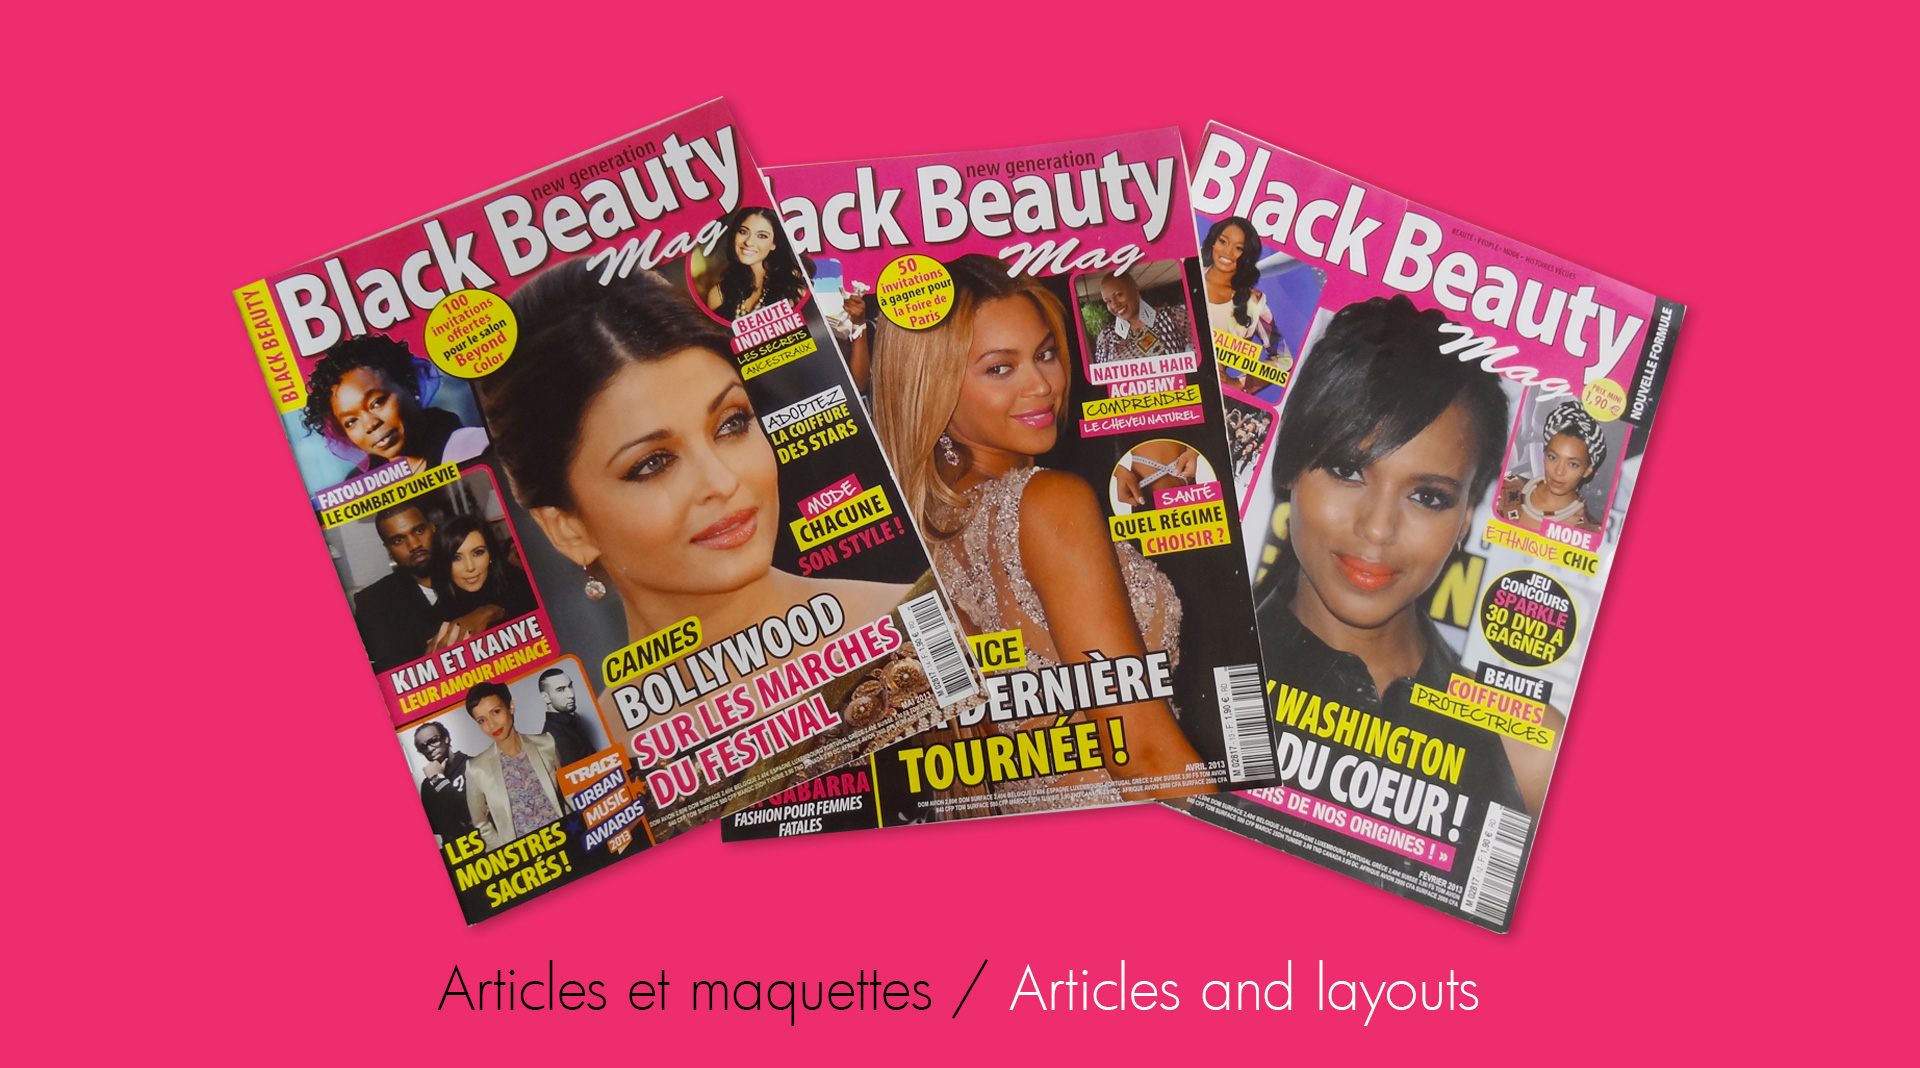  couv magazine Black beauty magazine 